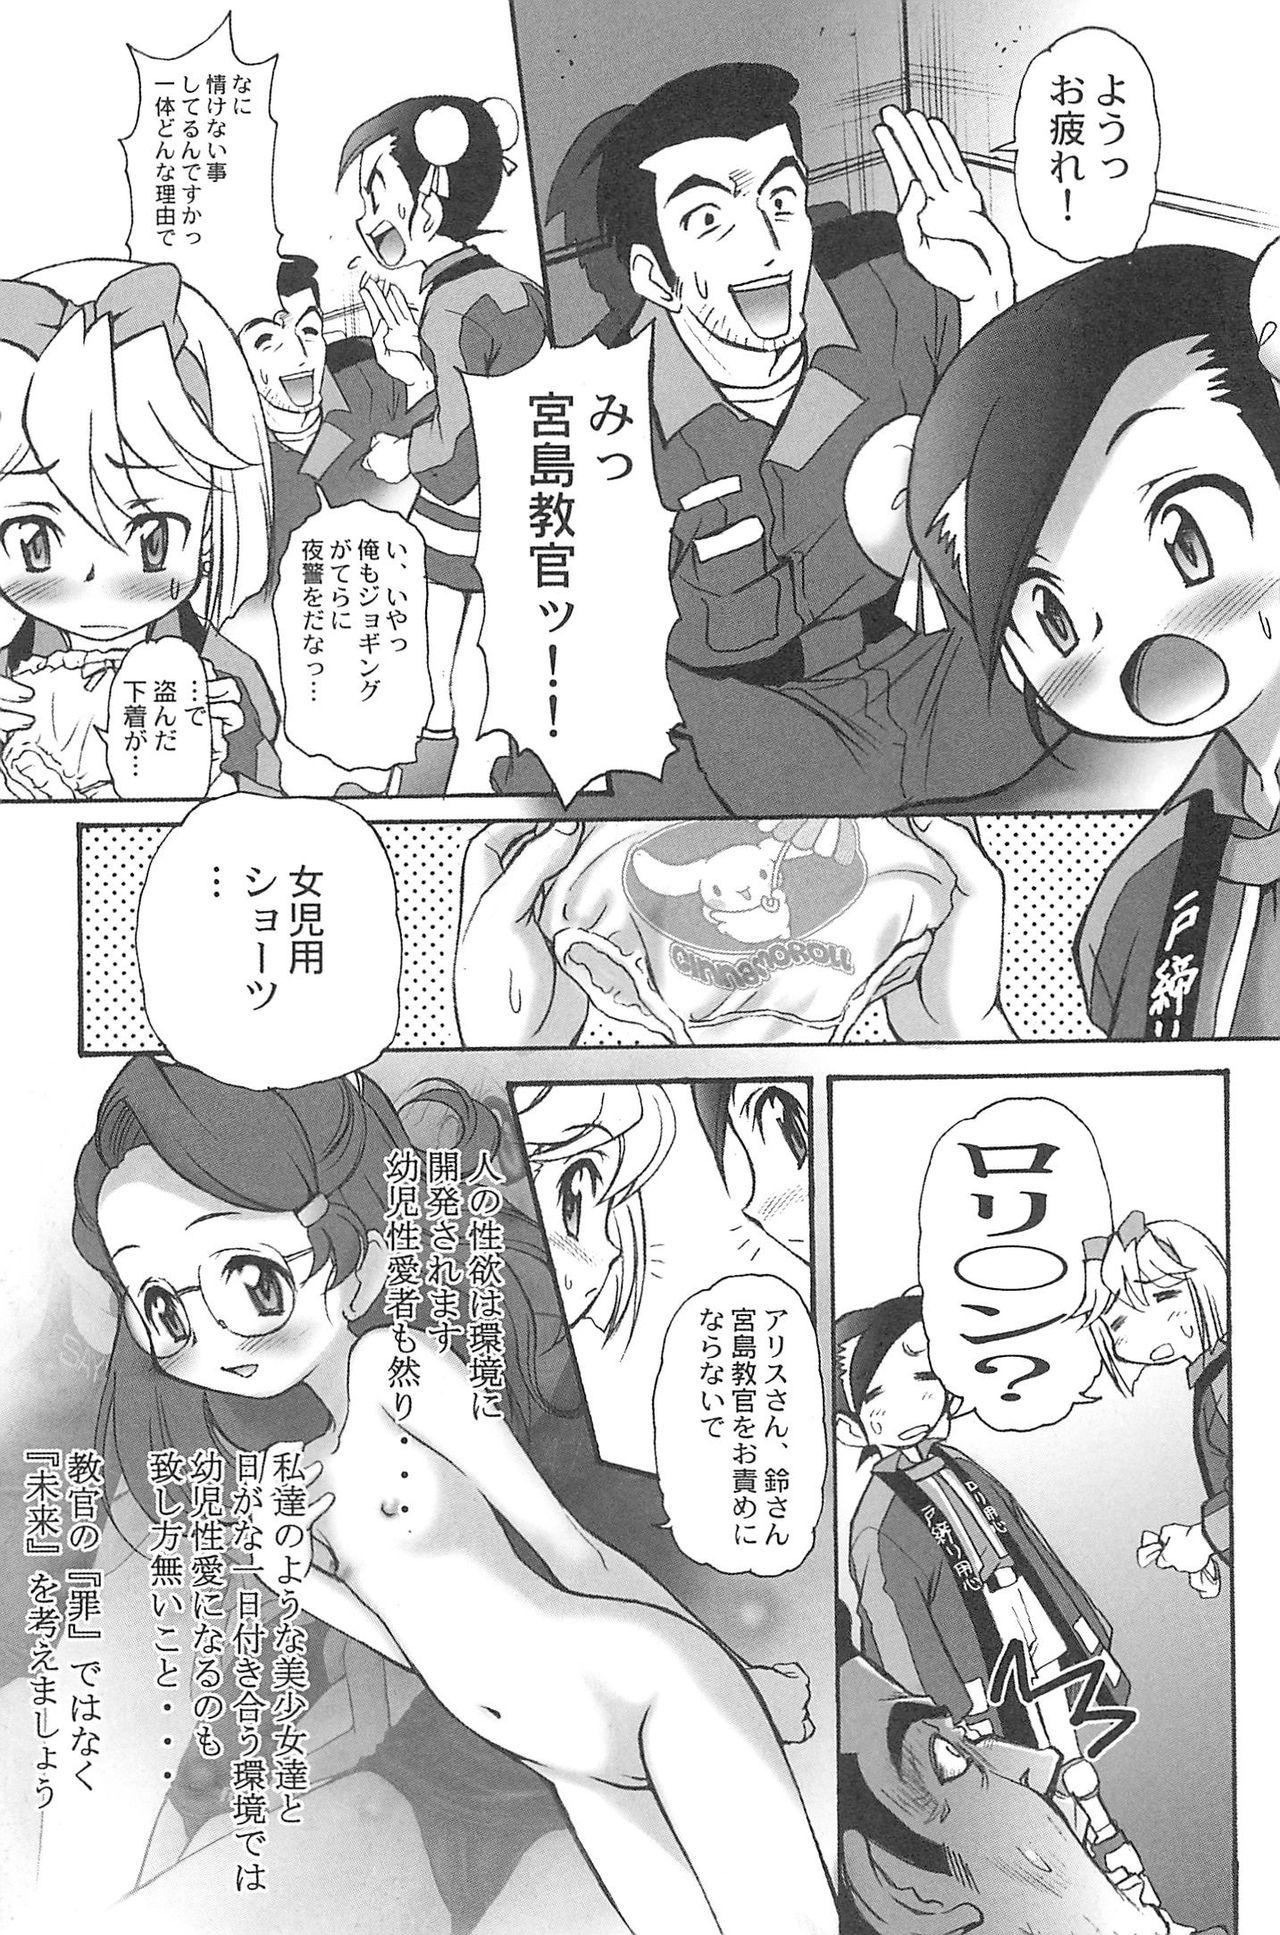 Ariake International X-rated Manga Festival Mercy Rabbit SPECIAL 77